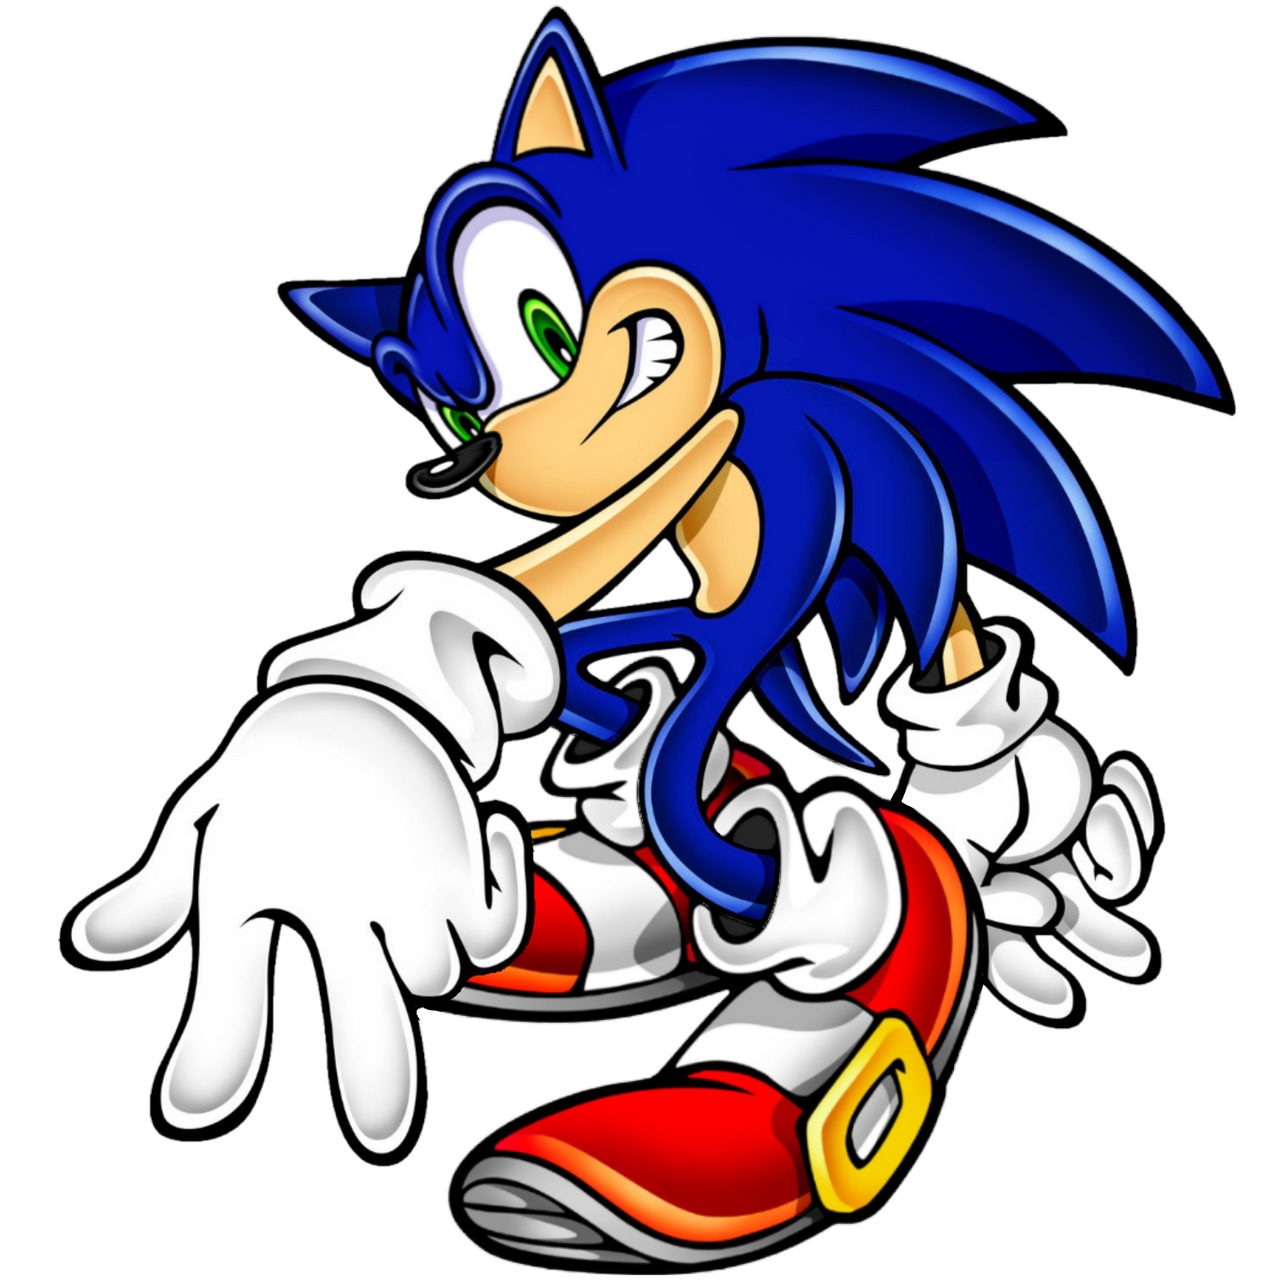 Classic Era Sonic the Hedgehog by bandicootbrawl96 on DeviantArt